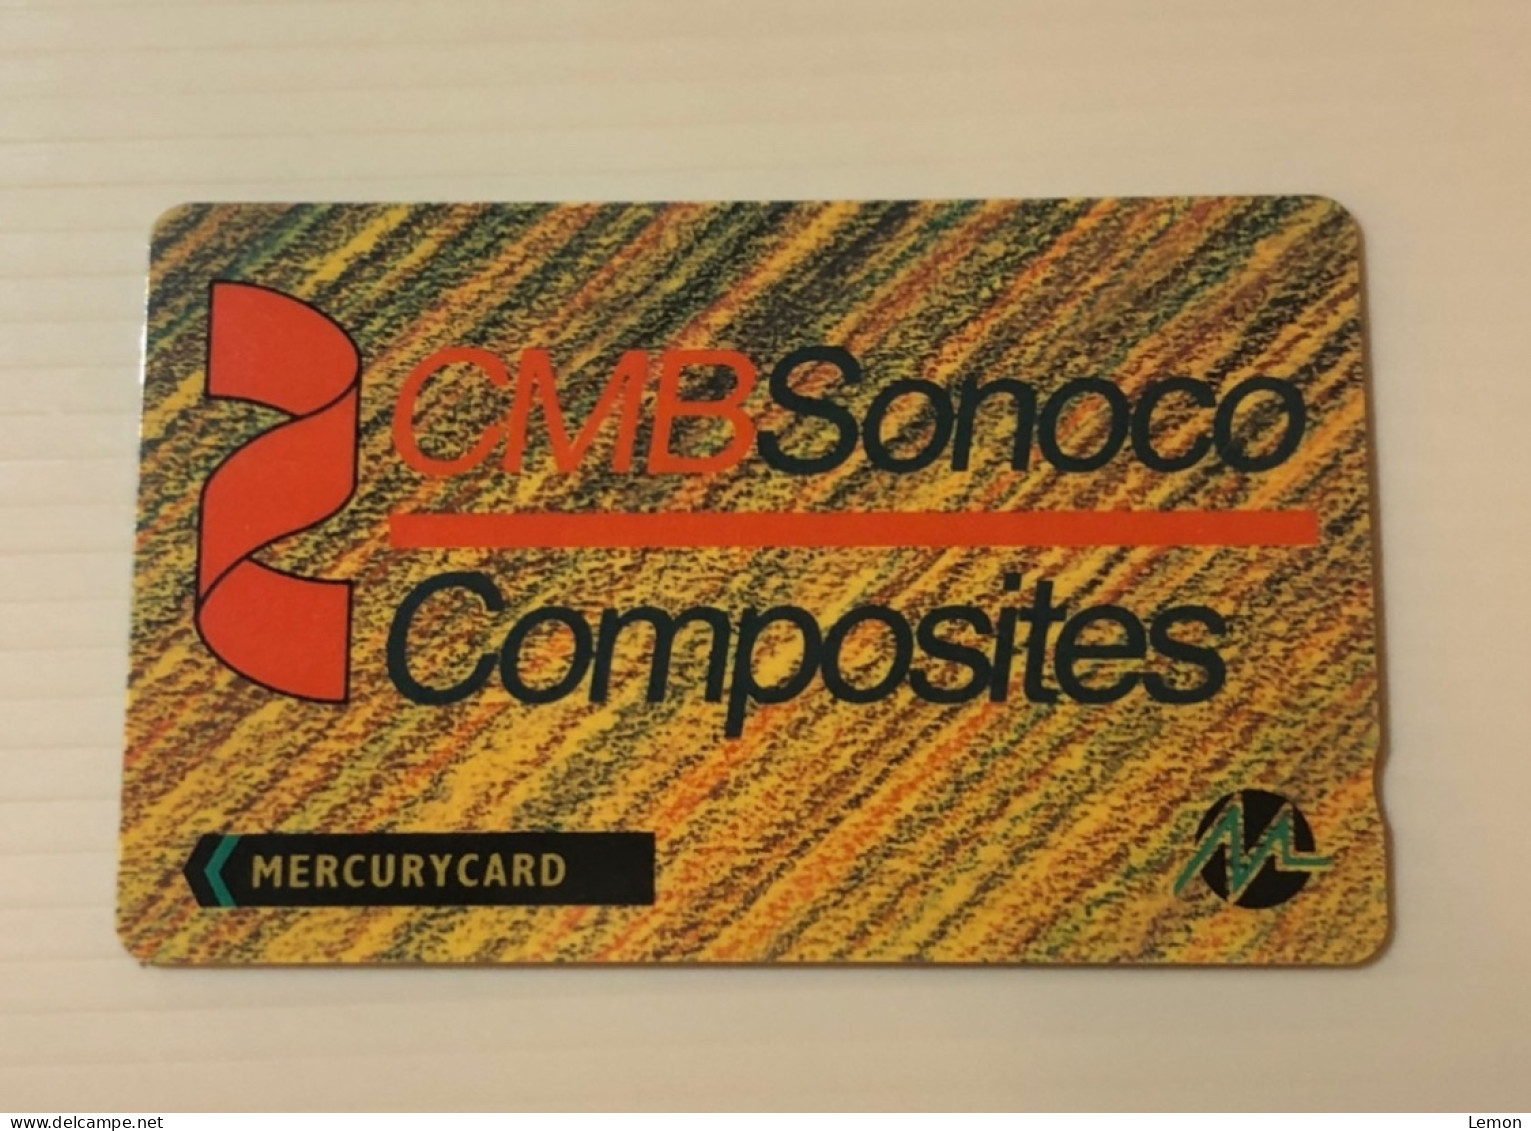 UK United Kingdom - British MercuryCard Mercury Magnetic GPT Phonecard - CMB Sonoco Composites - Set Of 1 Used Card - Mercury Communications & Paytelco